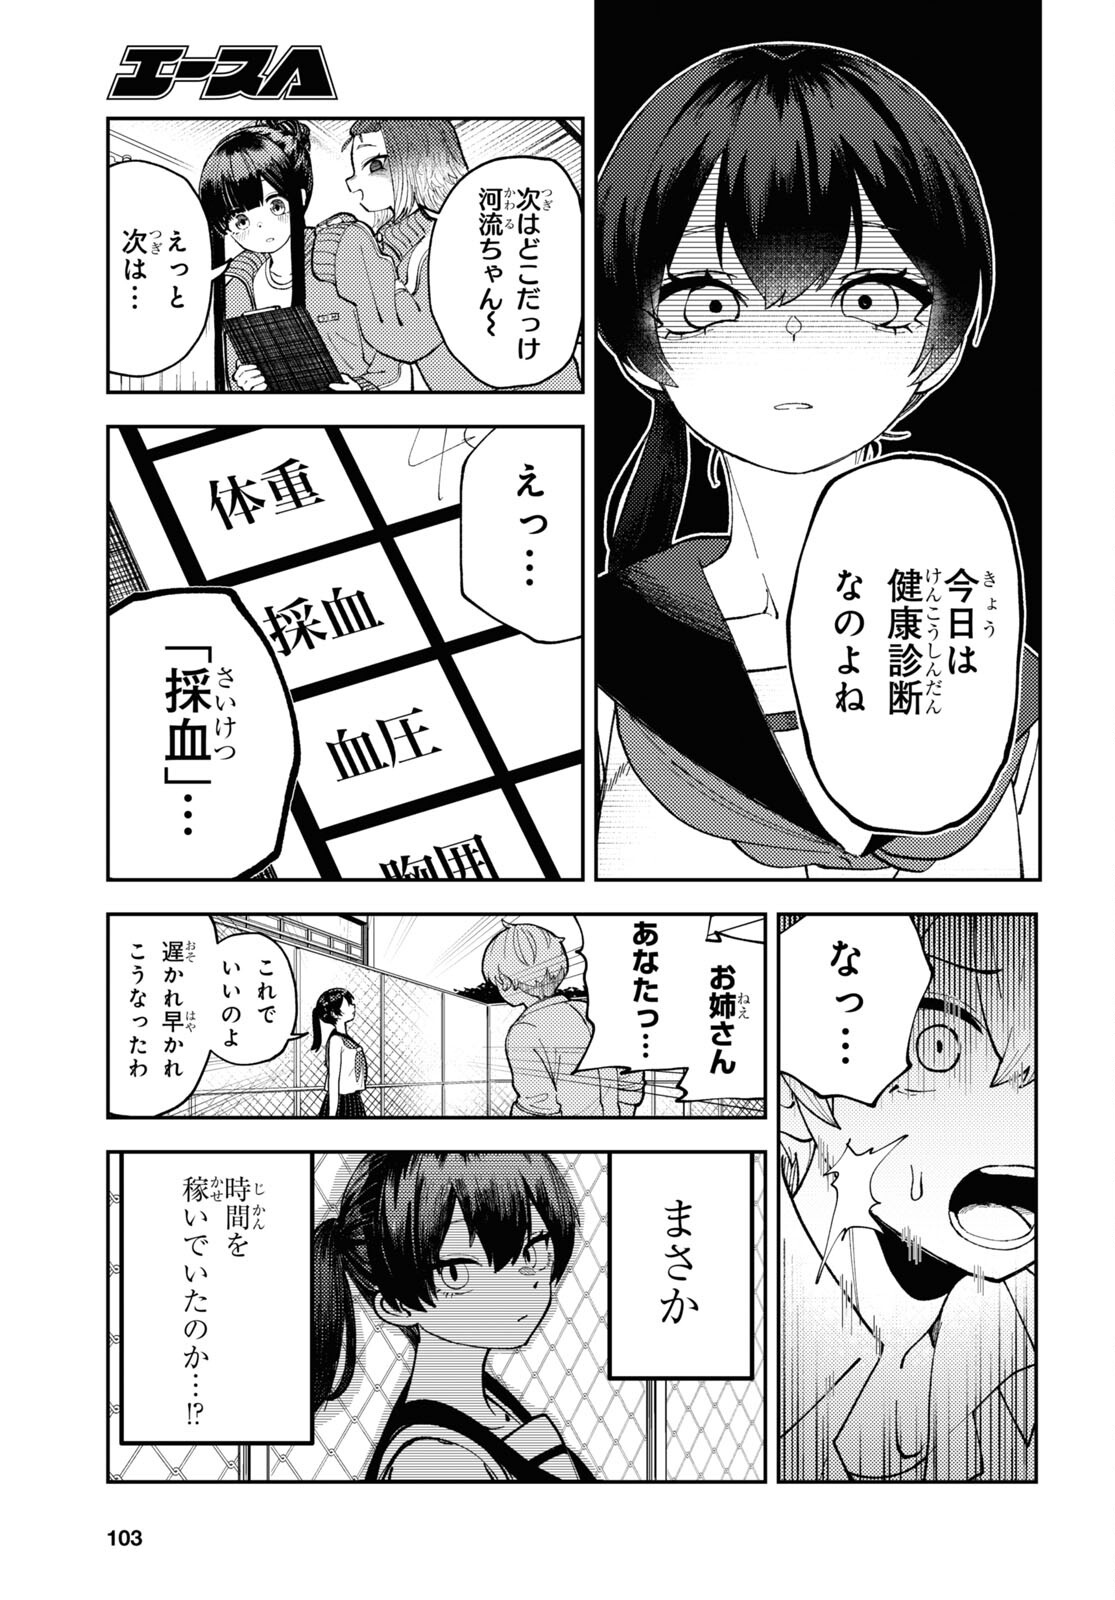 Garuru Girl - Chapter 3 - Page 17